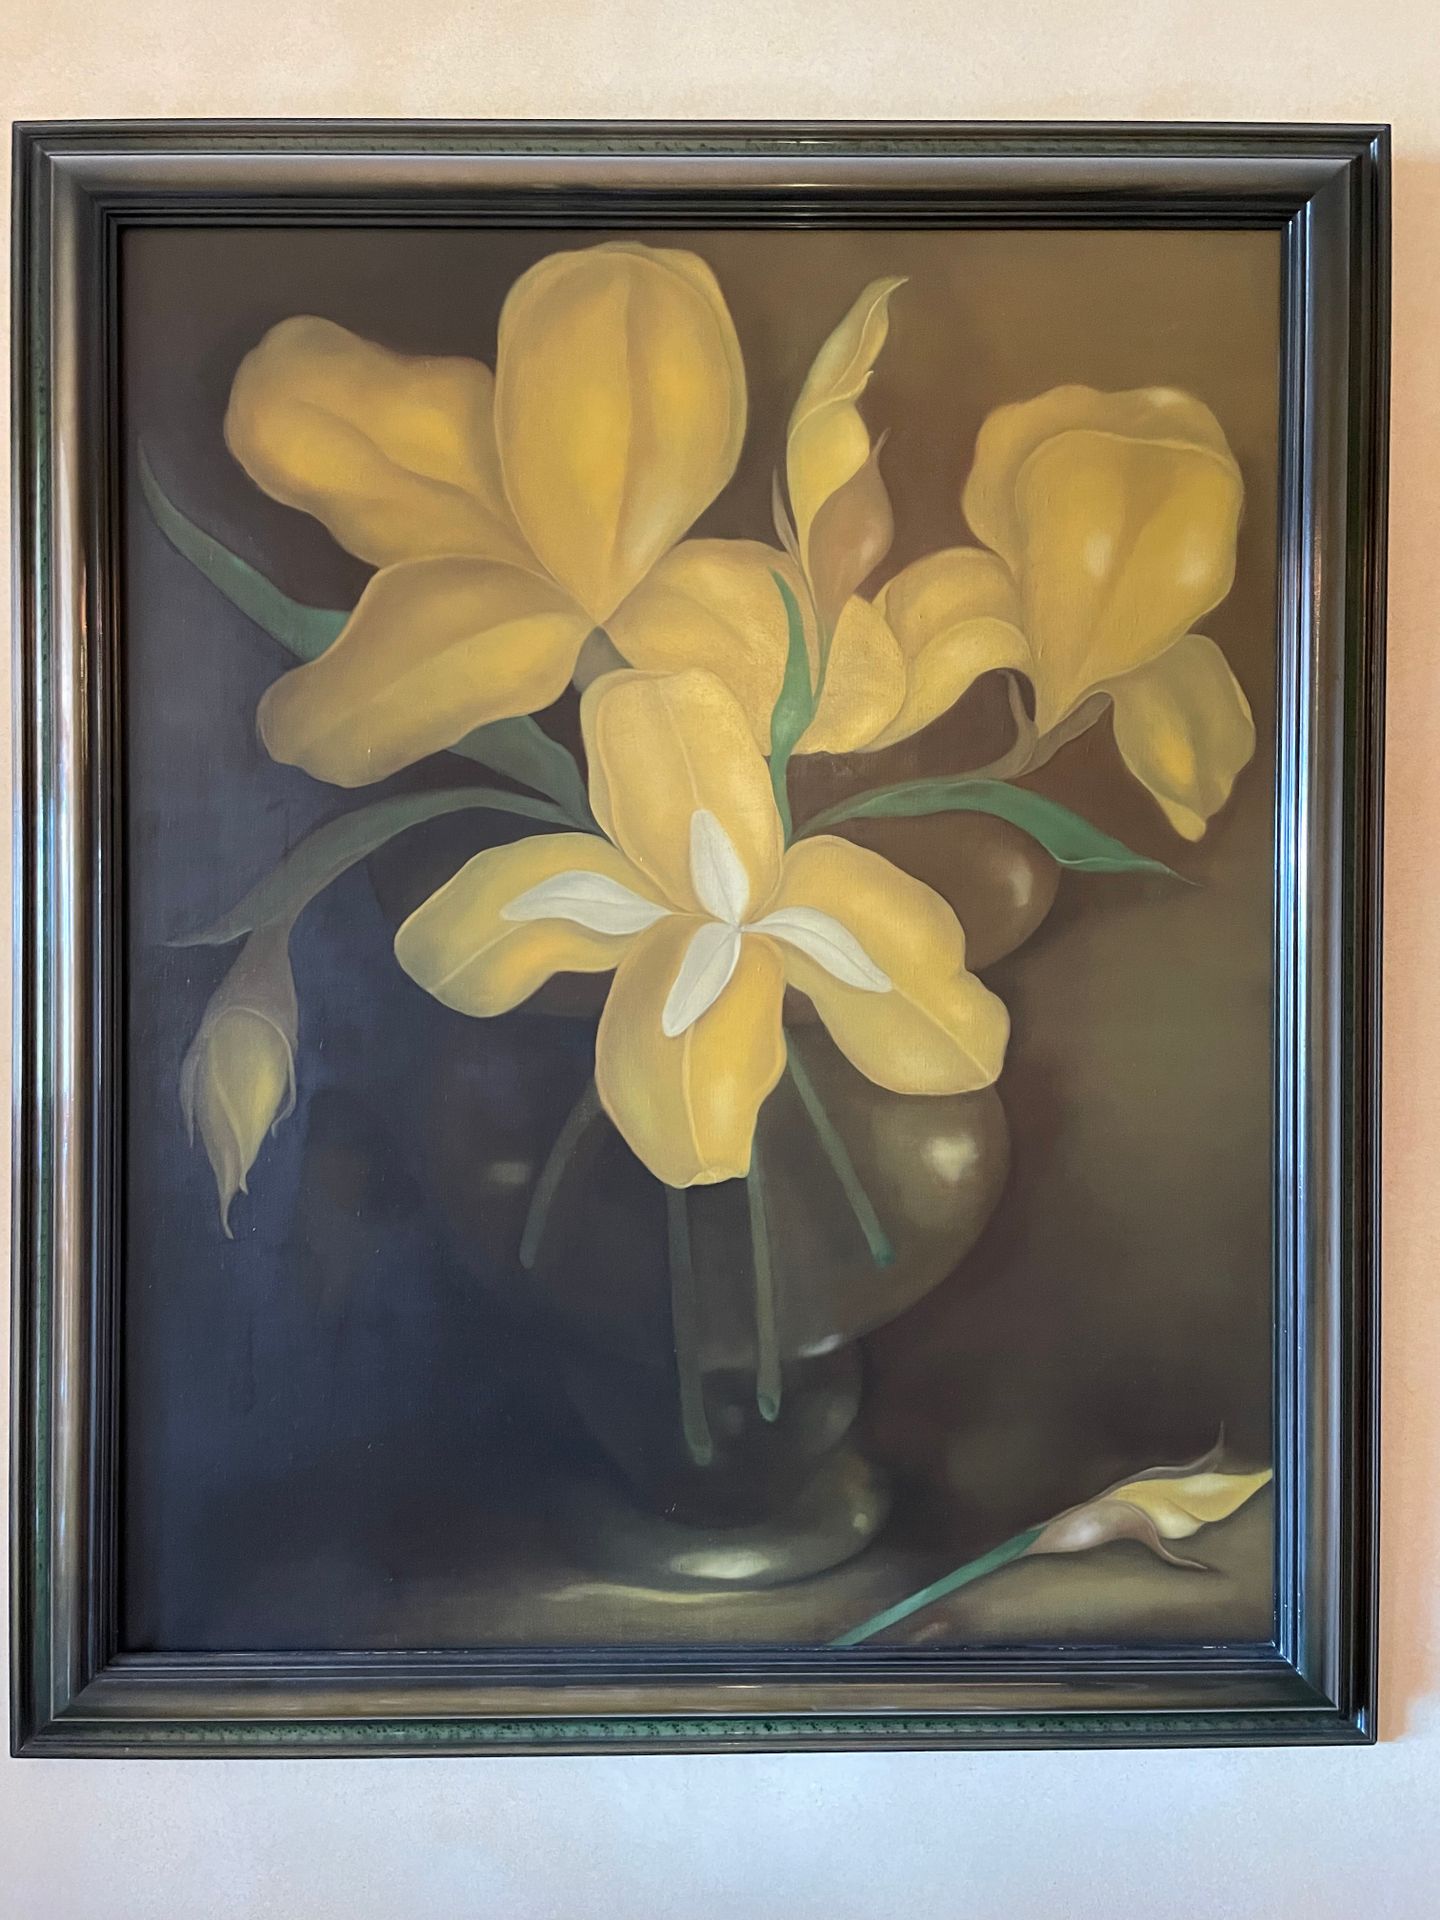 Ecole Moderne Vases of yellow irises
Oil on canvas
108x88 cm.